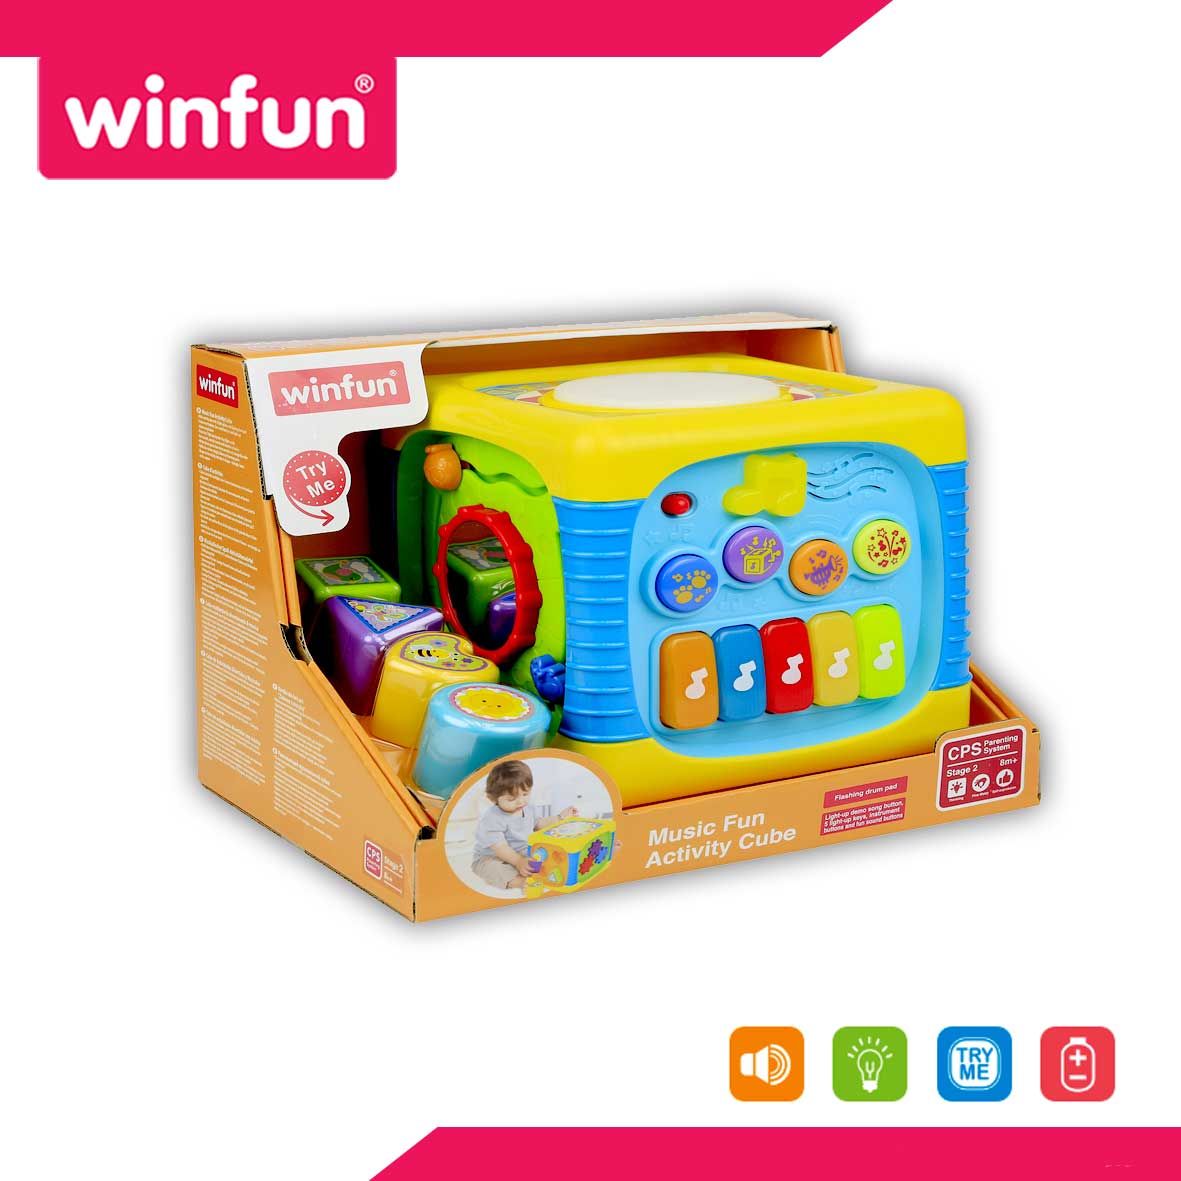 Winfun Music Fun Activity Cube - W000741 - 1